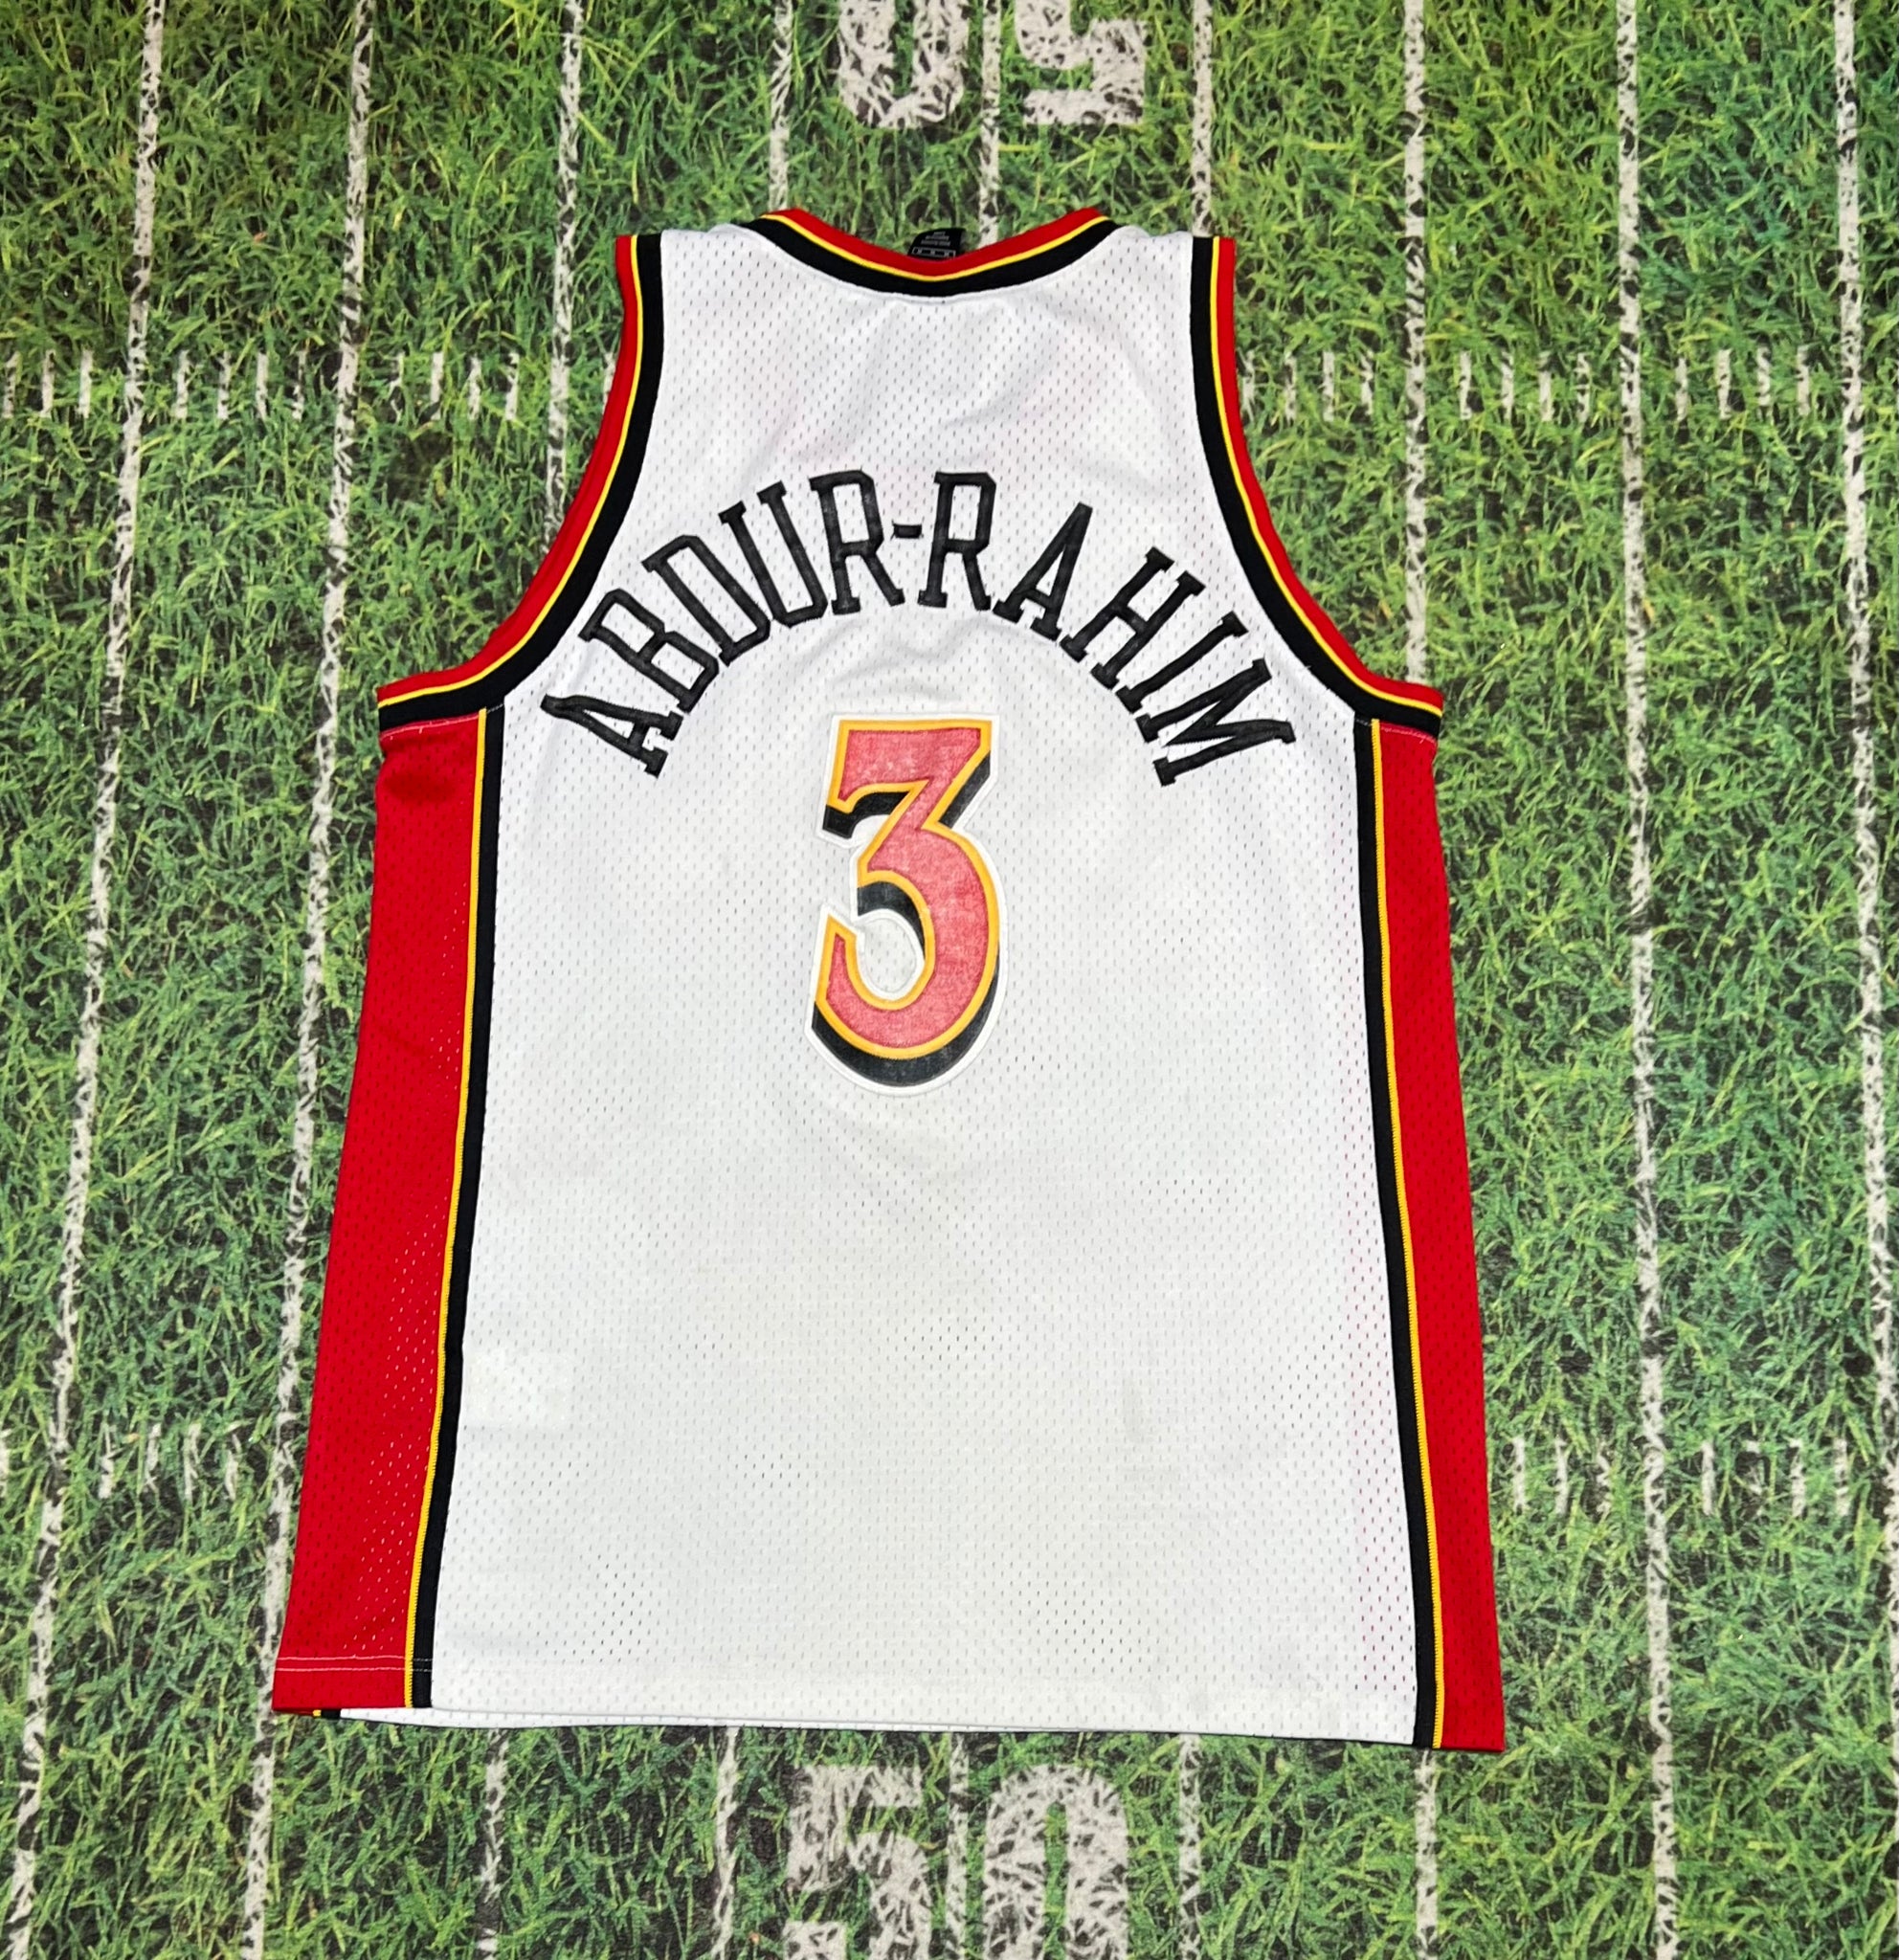 Nike VINTAGE NBA New Atlanta Hawks Shareef Rahim #3 Jersey Size XL.